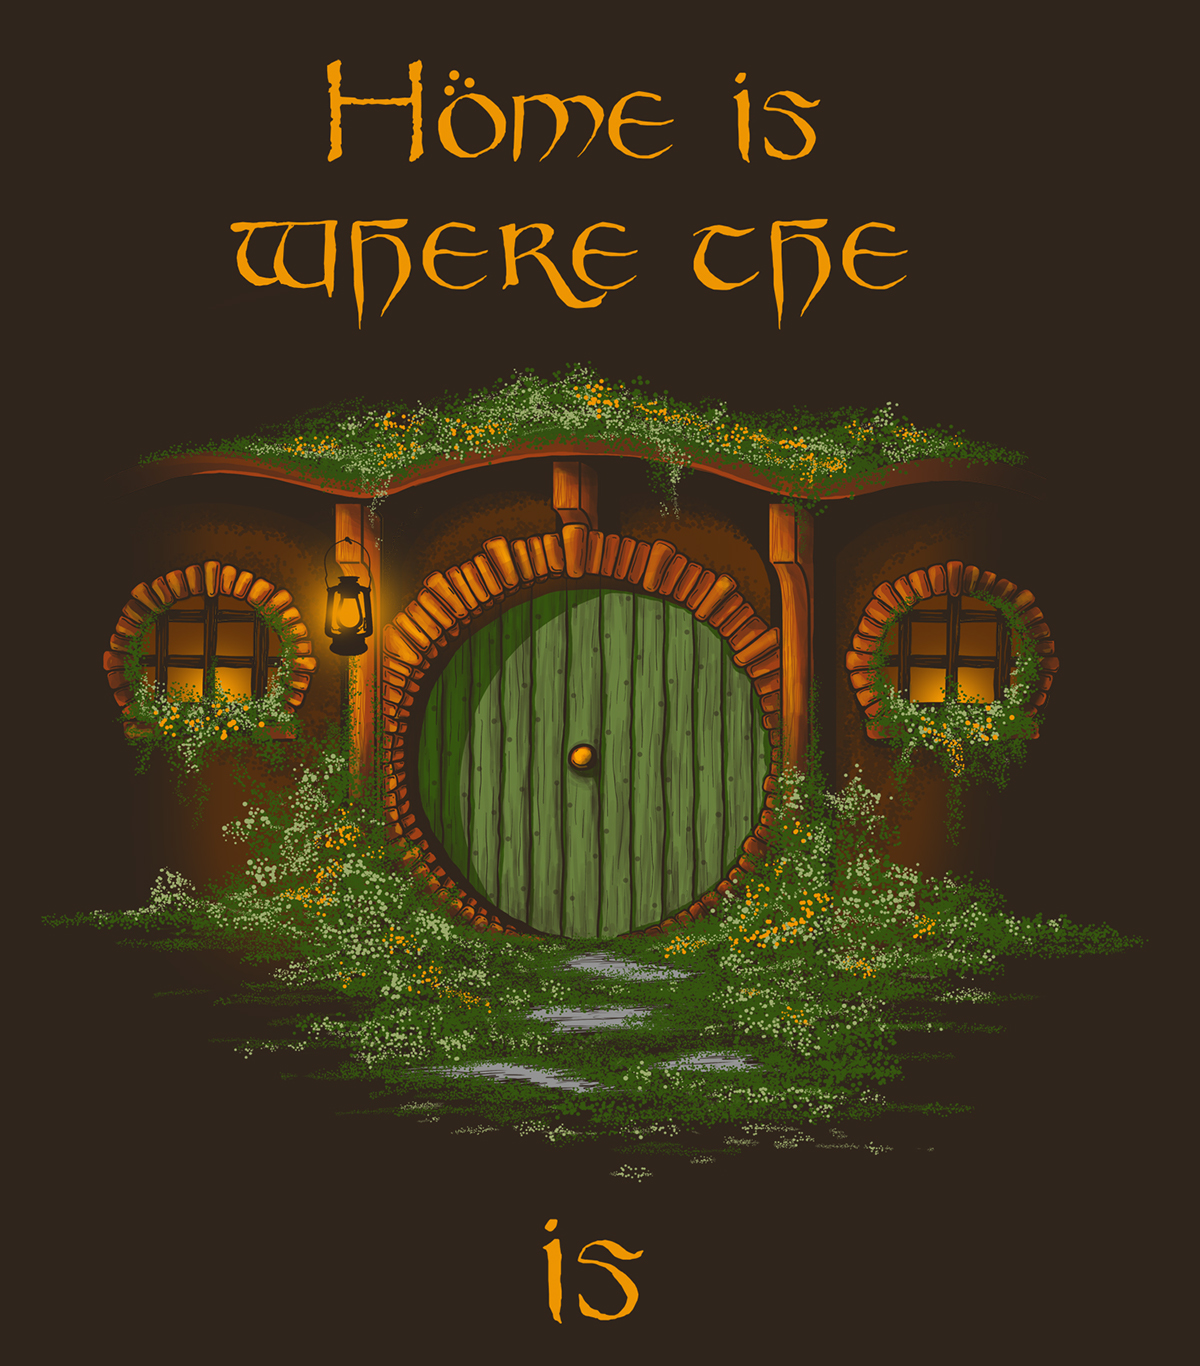 Adobe Portfolio the Hobbit LOTR ring sauron Bilbo Baggins gandalf frodo Gollum middle earth home Hobbiton Shire bagend mordor